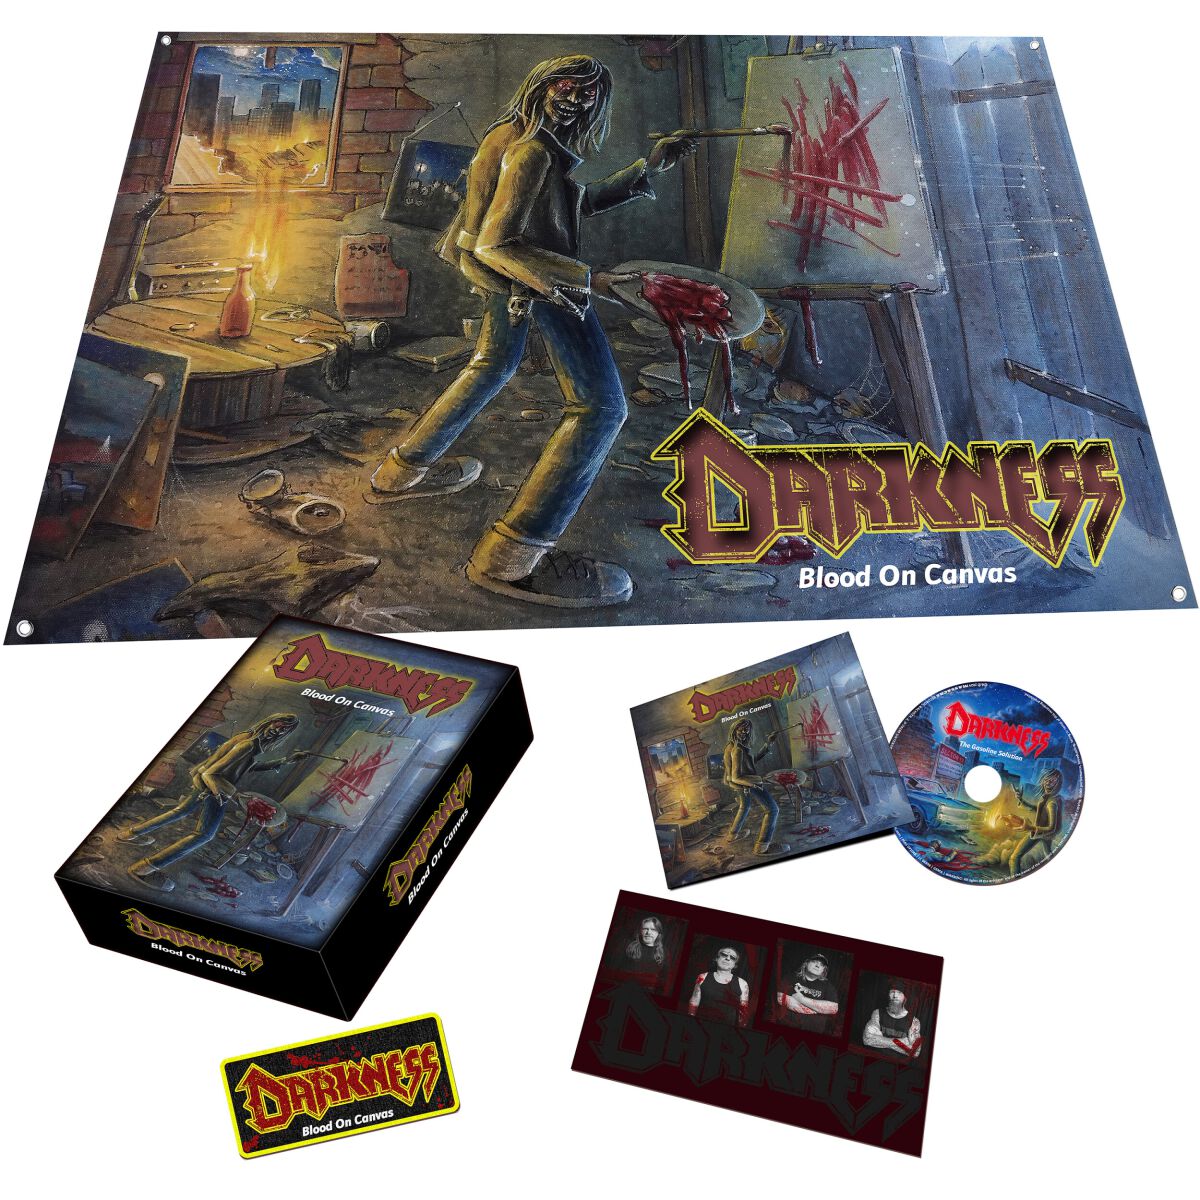 Blood on canvas von Darkness - CD (Boxset, Limited Edition)